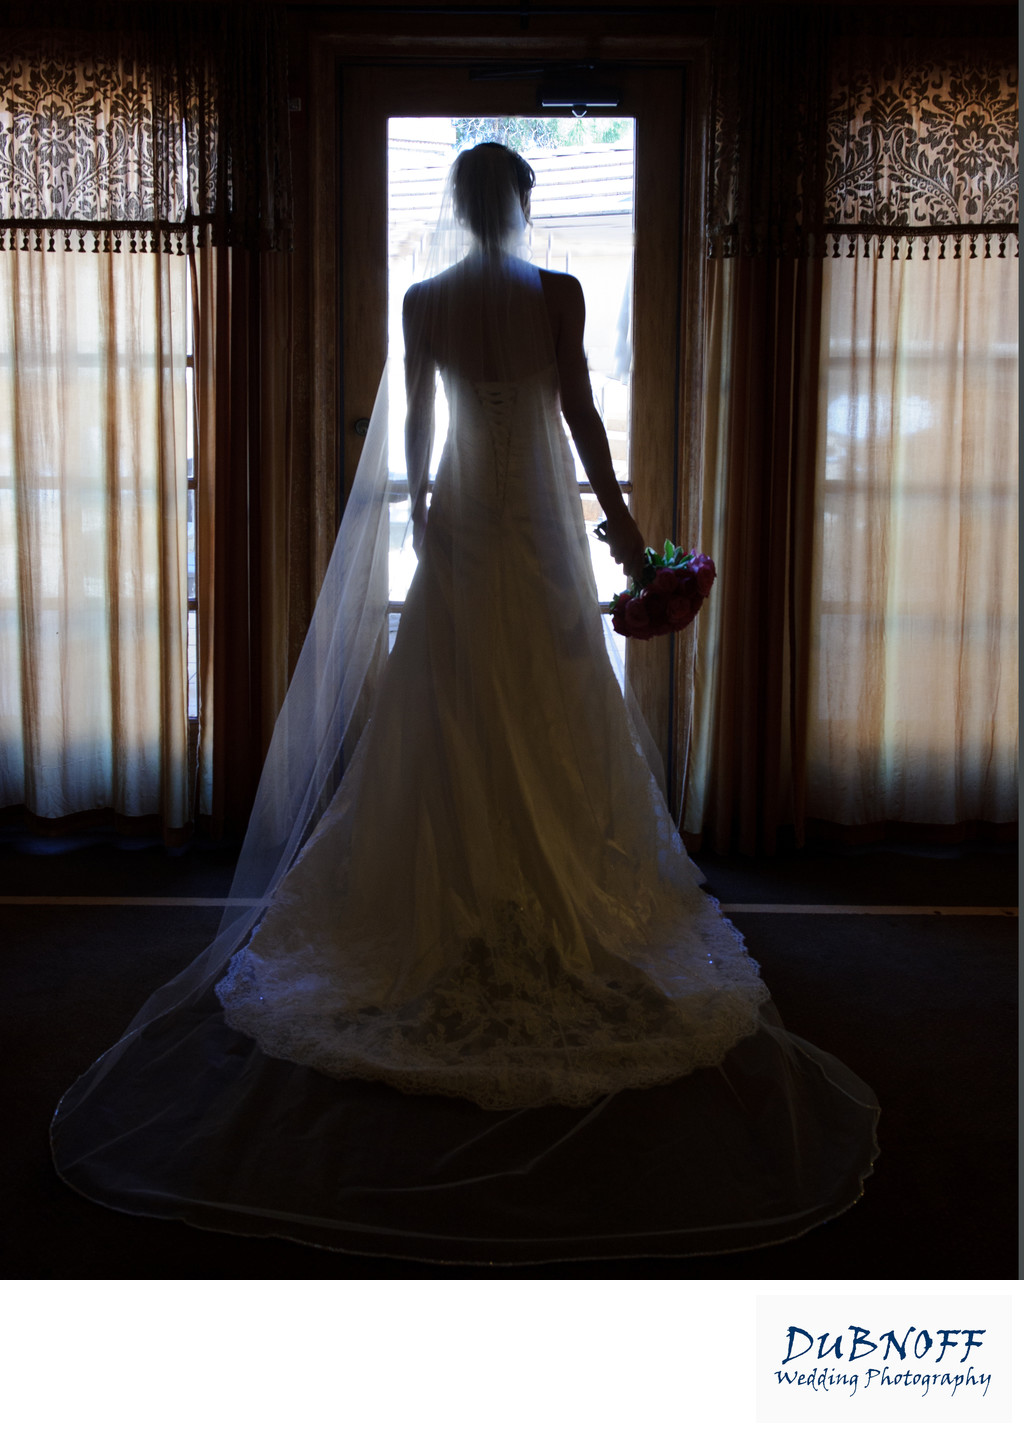 blackhawk silhouette window image during bridal prep